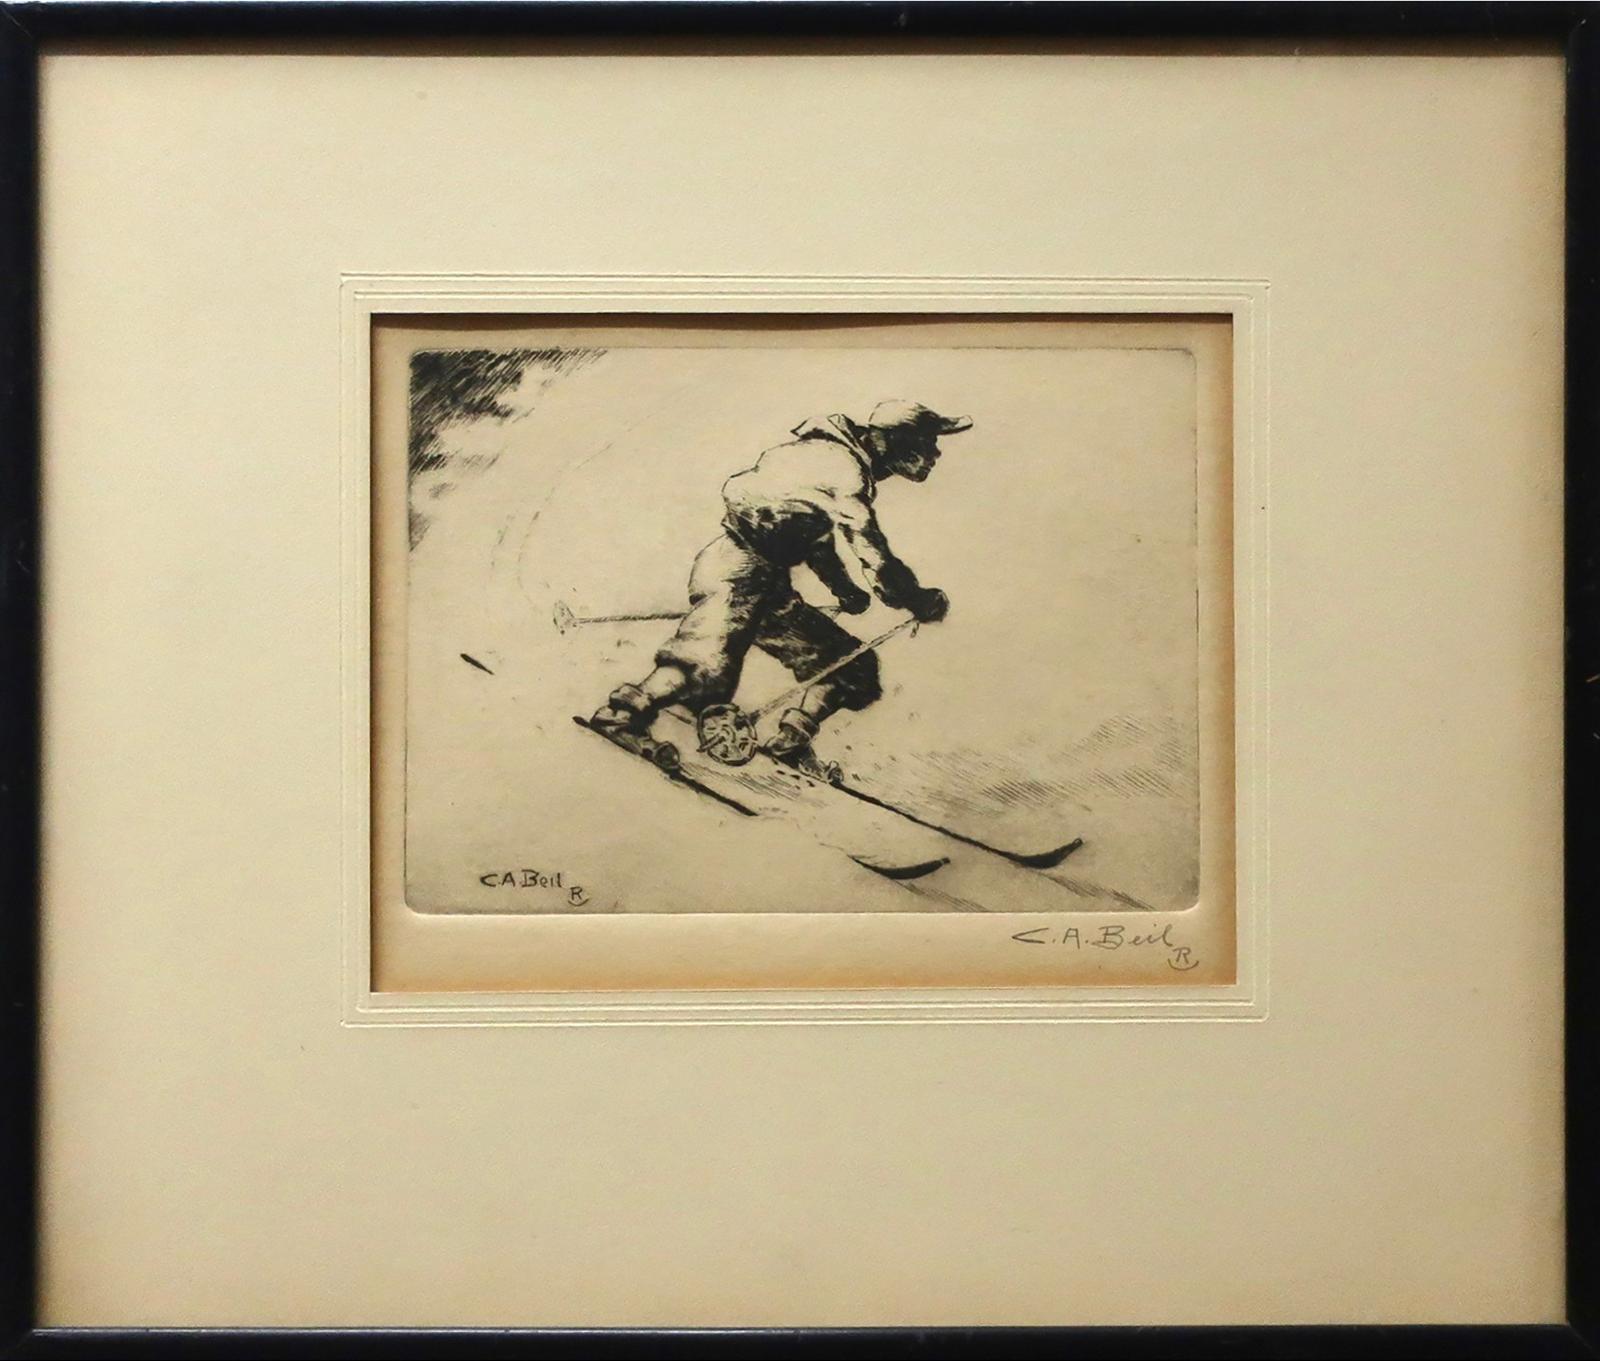 Charles A. (Charlie) Beil (1894-1976) - Downhill Skier